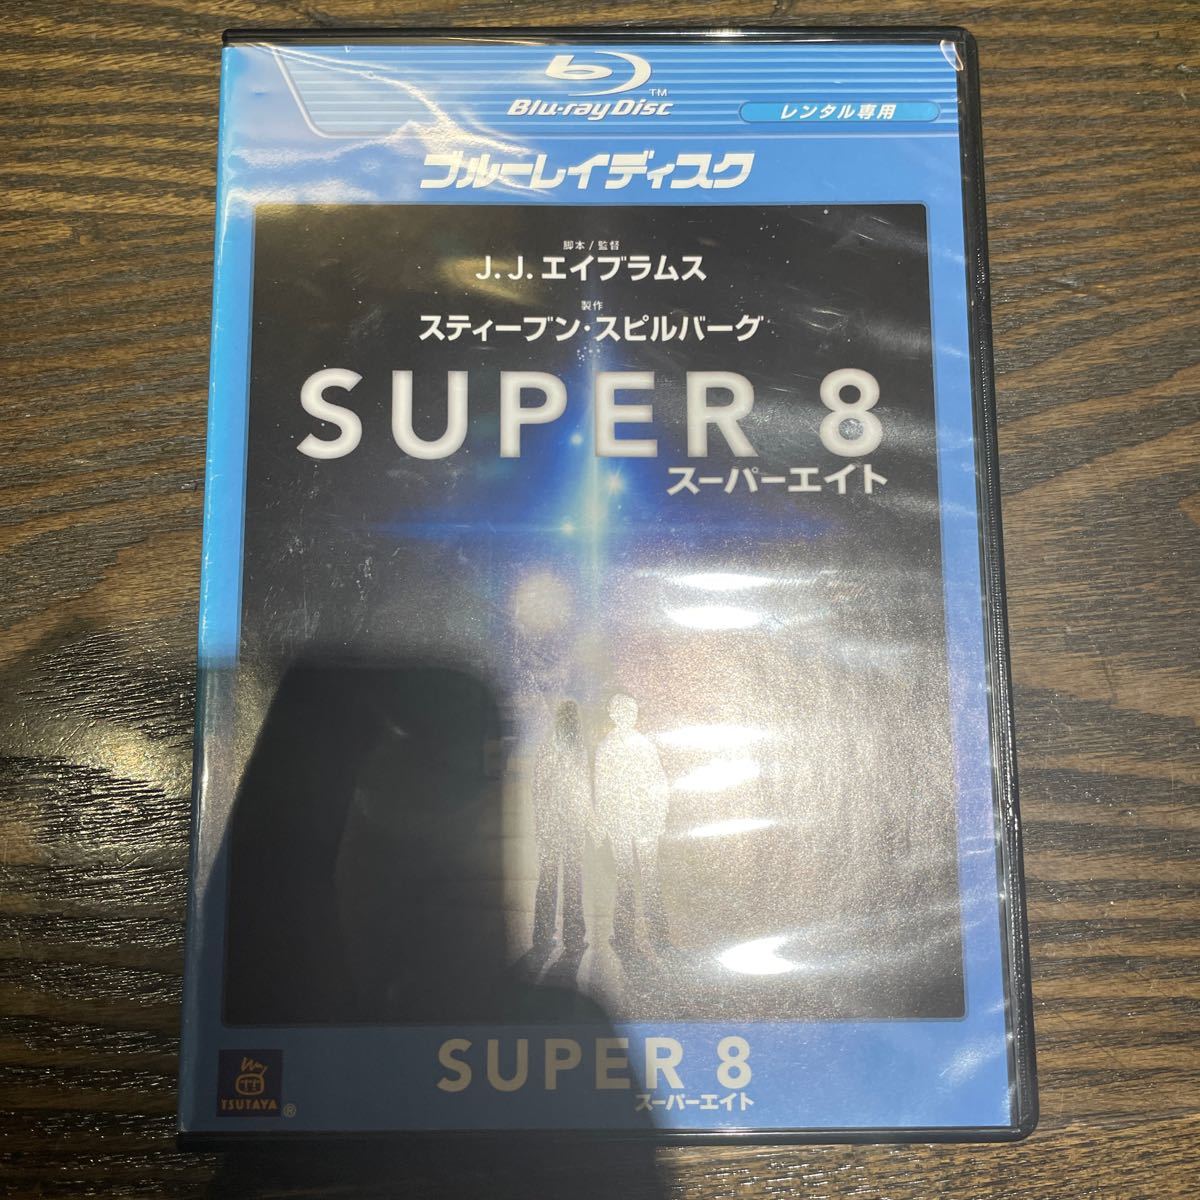 SUPER 8 スーパーエイト ブルーレイディスク ブルーレイ BD + DVD